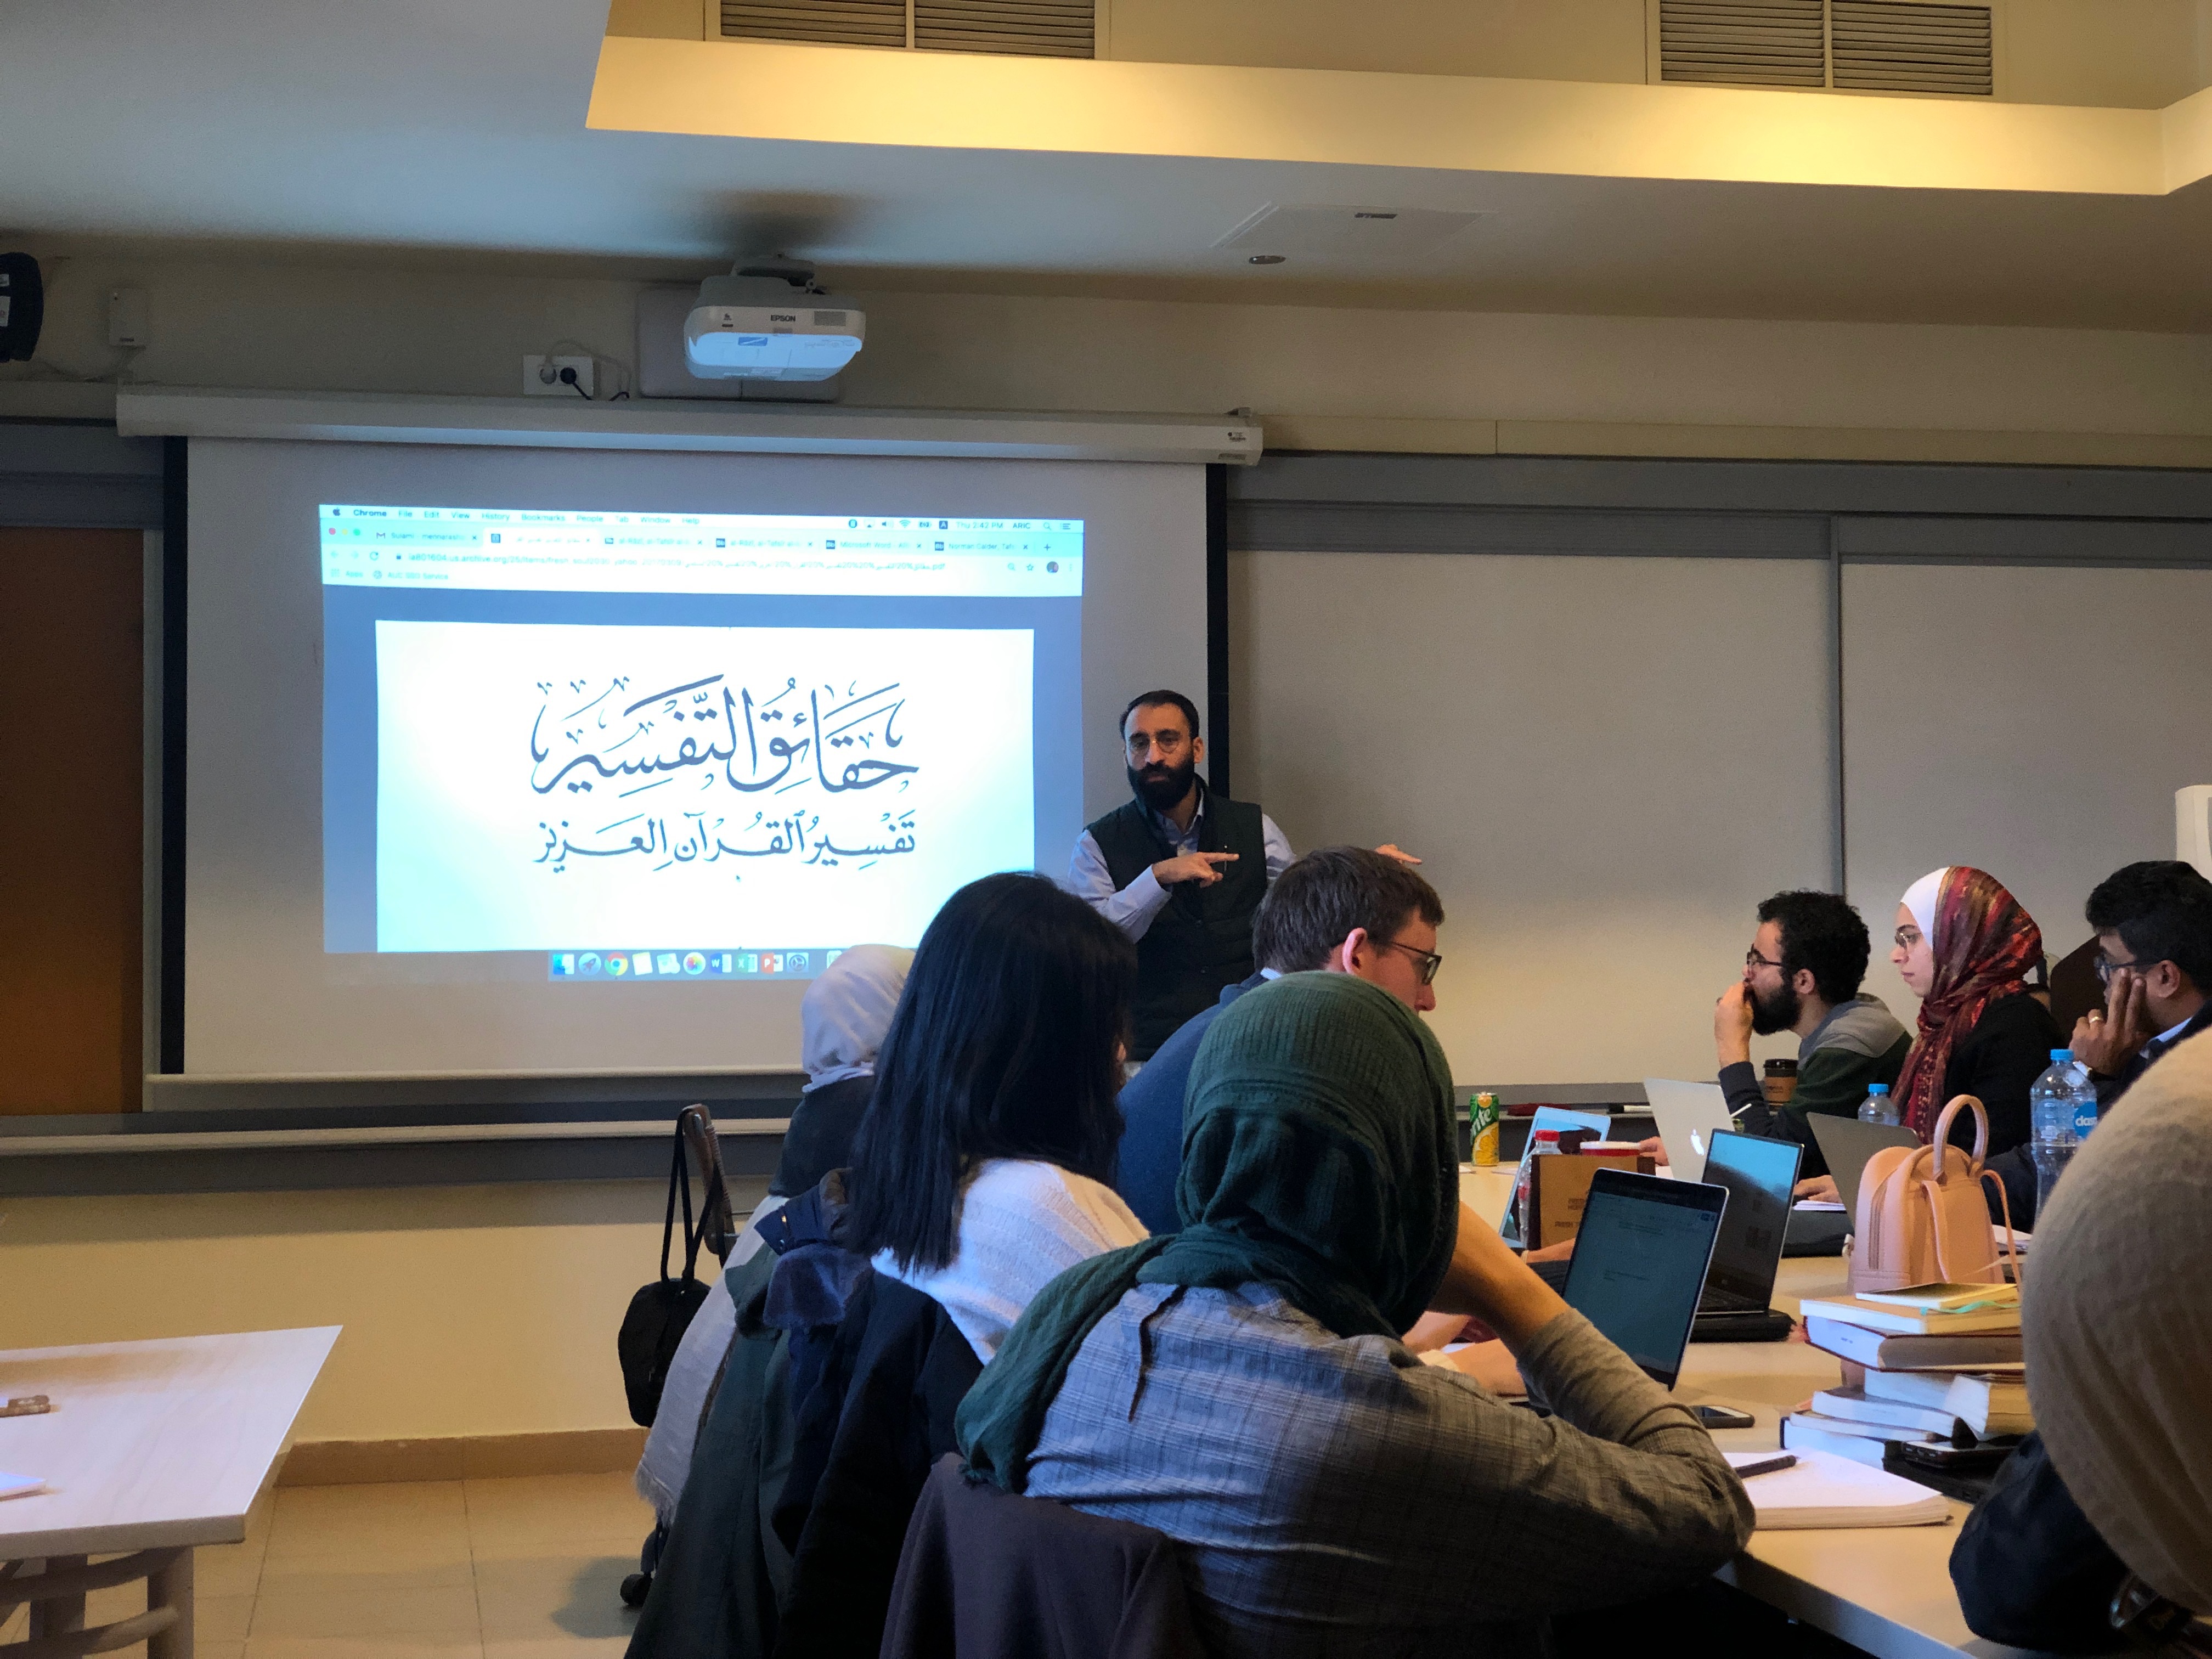 Ahmad Khan teaches at AUC